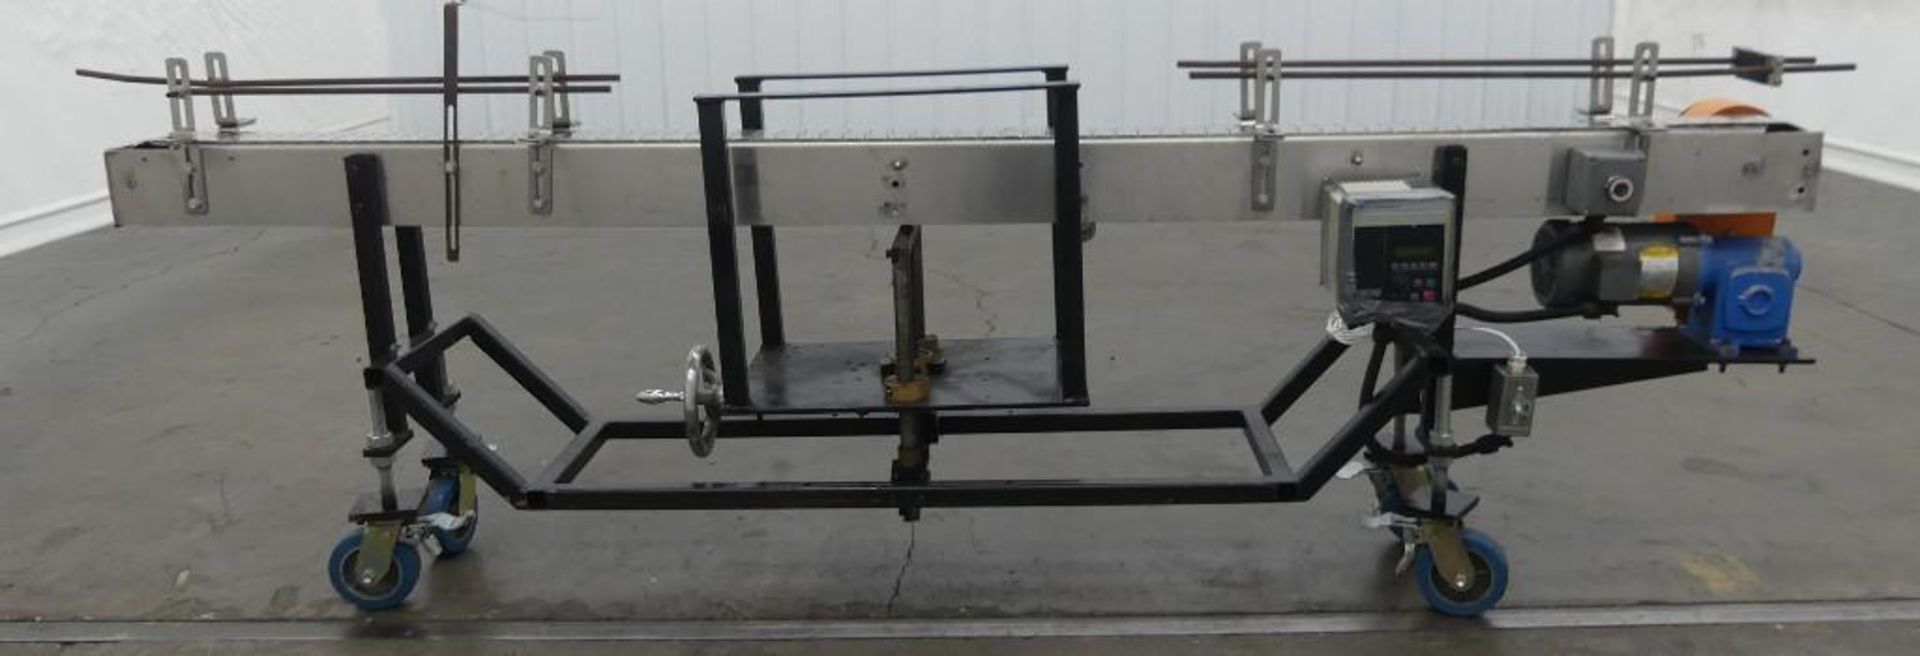 9'L x 4.5"W Stainless Steel Conveyor